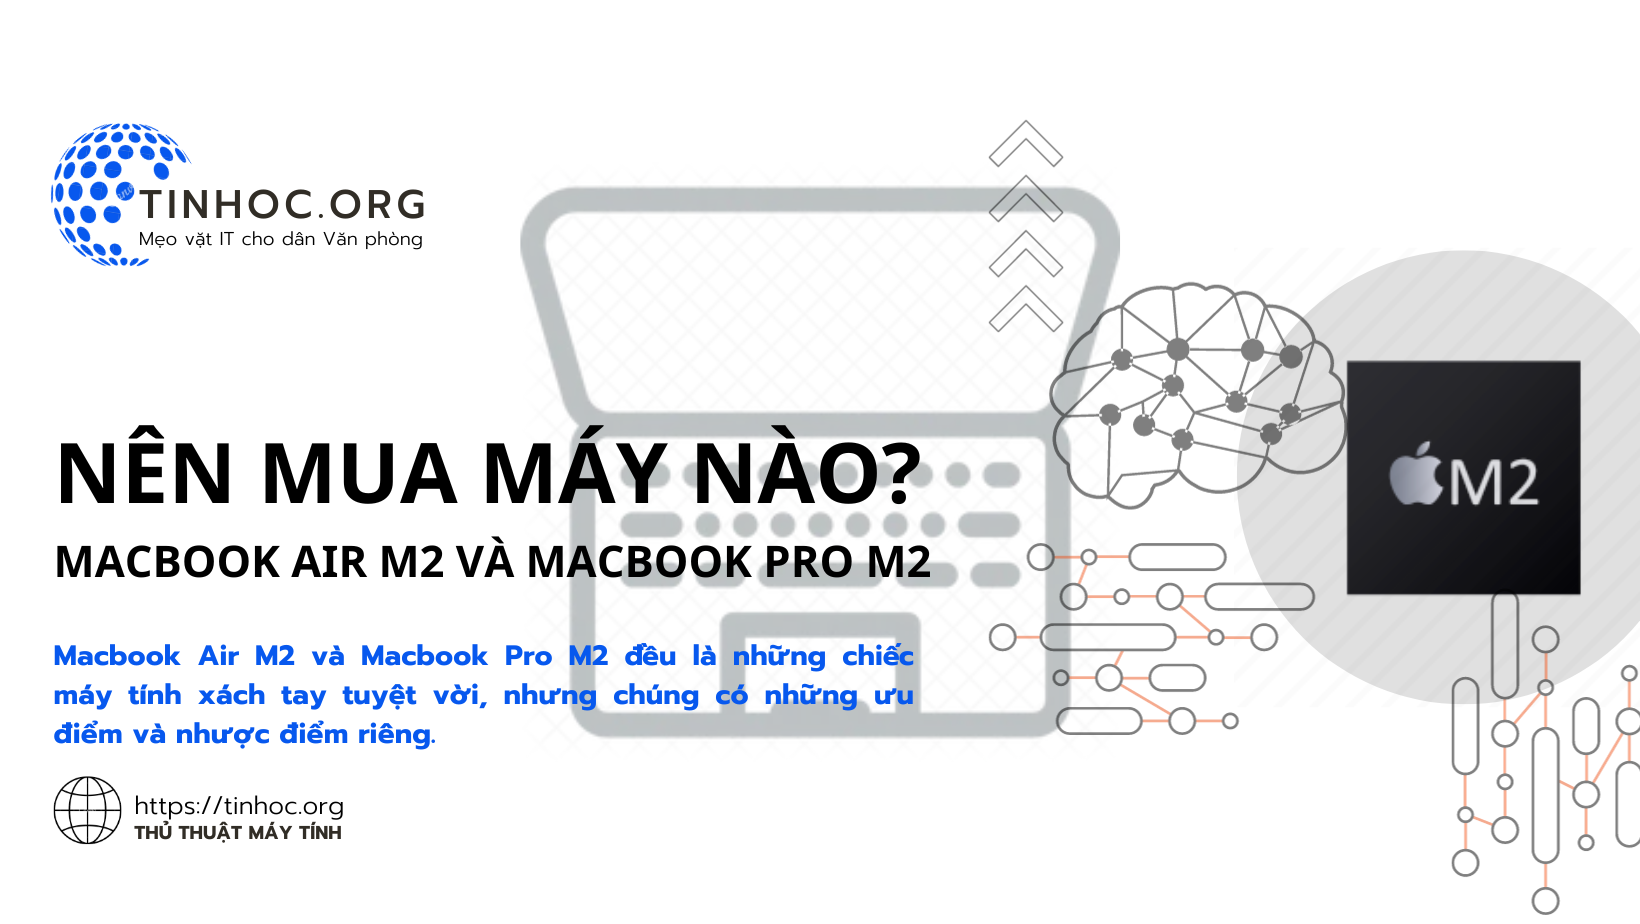 Macbook Air M2 và Macbook Pro M2: Nên mua máy nào?